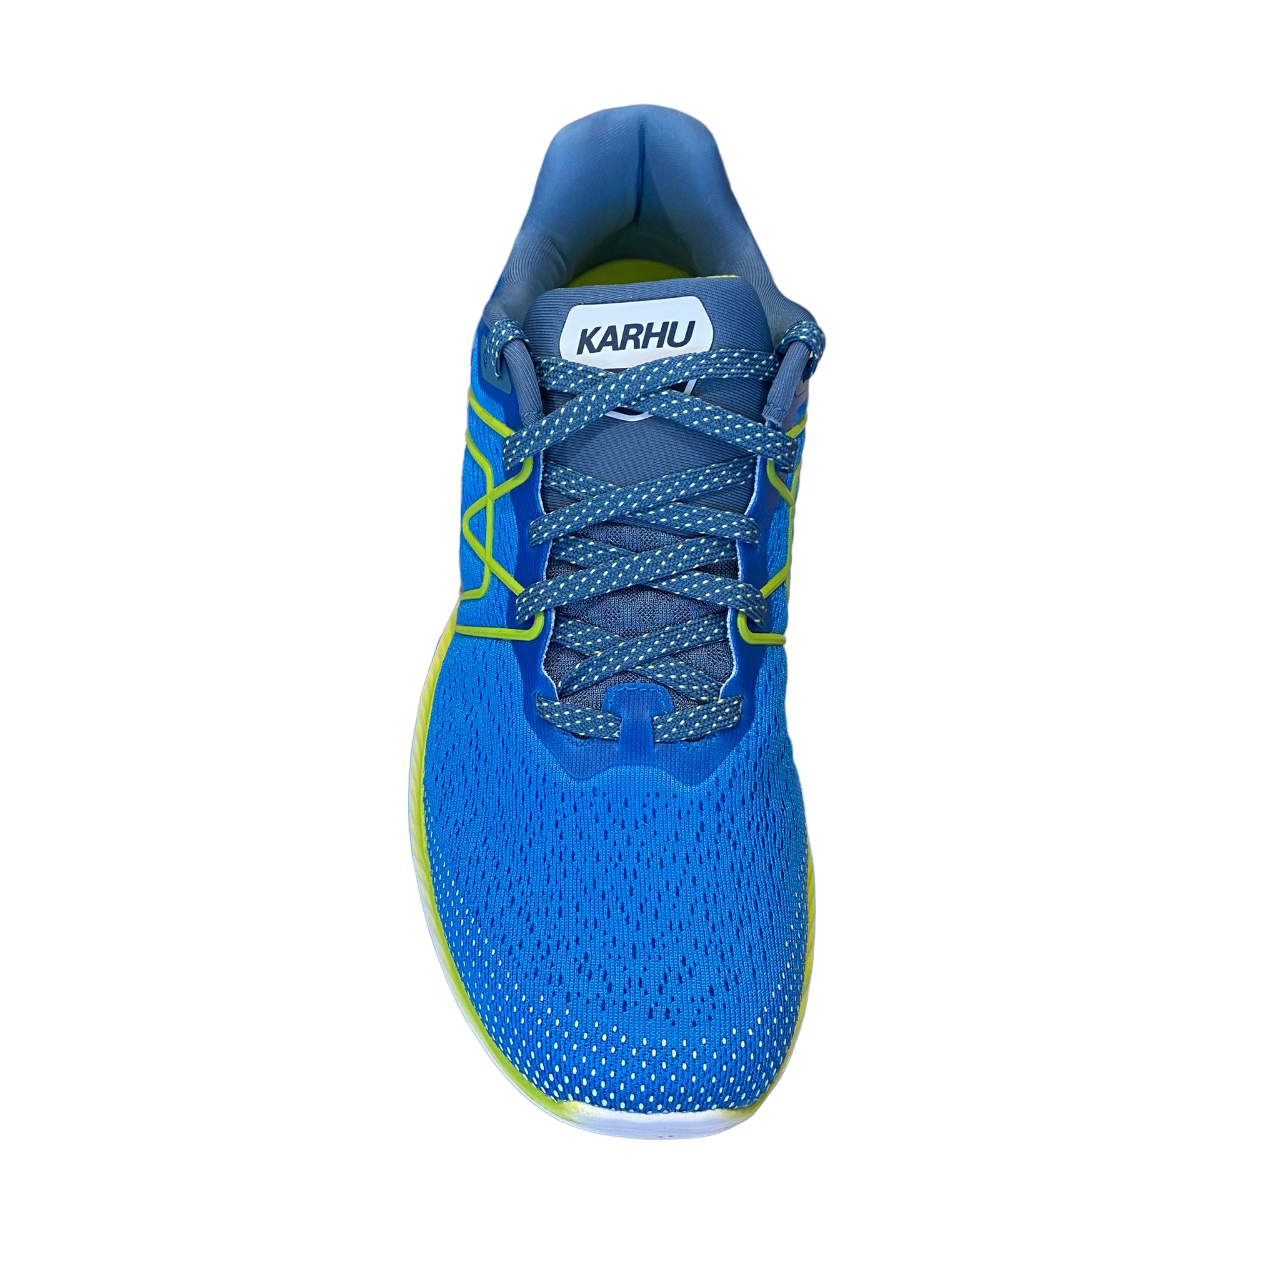 Karhu scarpa da corsa da uomo Fusion 3.5 F101006 blu verde